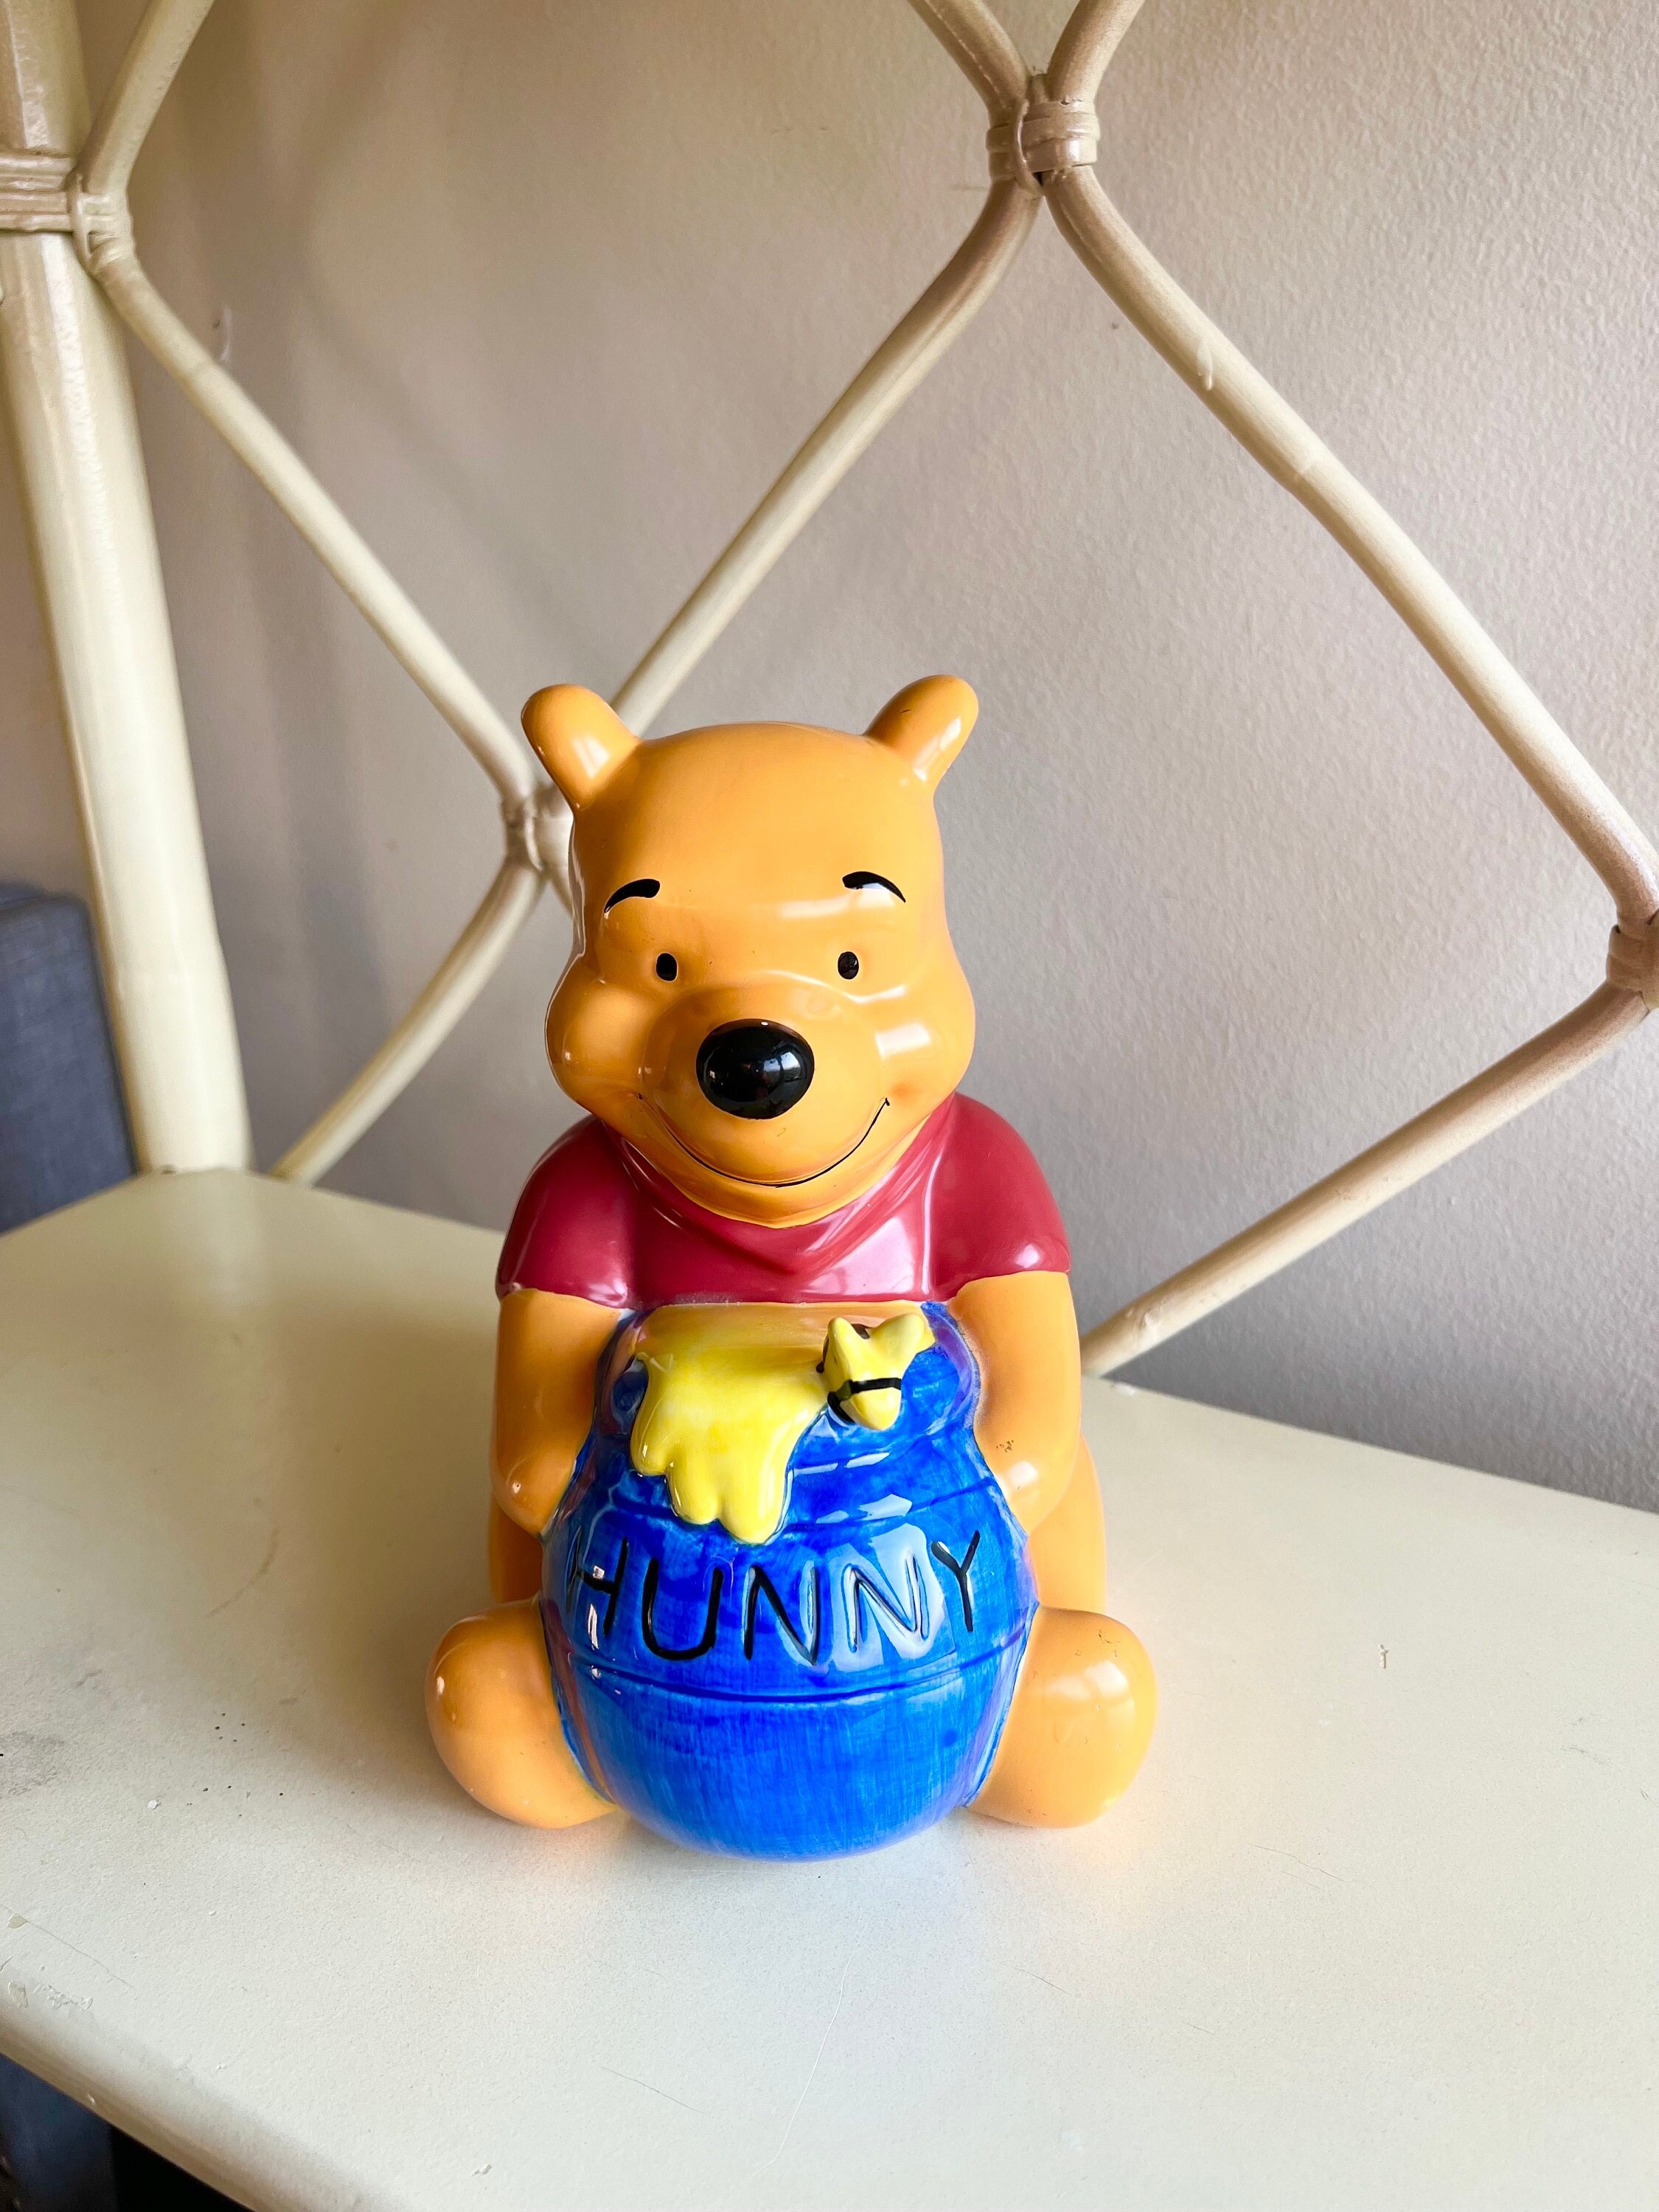 Disney Winnie the Pooh Honey Pot Cup Action Figure Toys Winnie